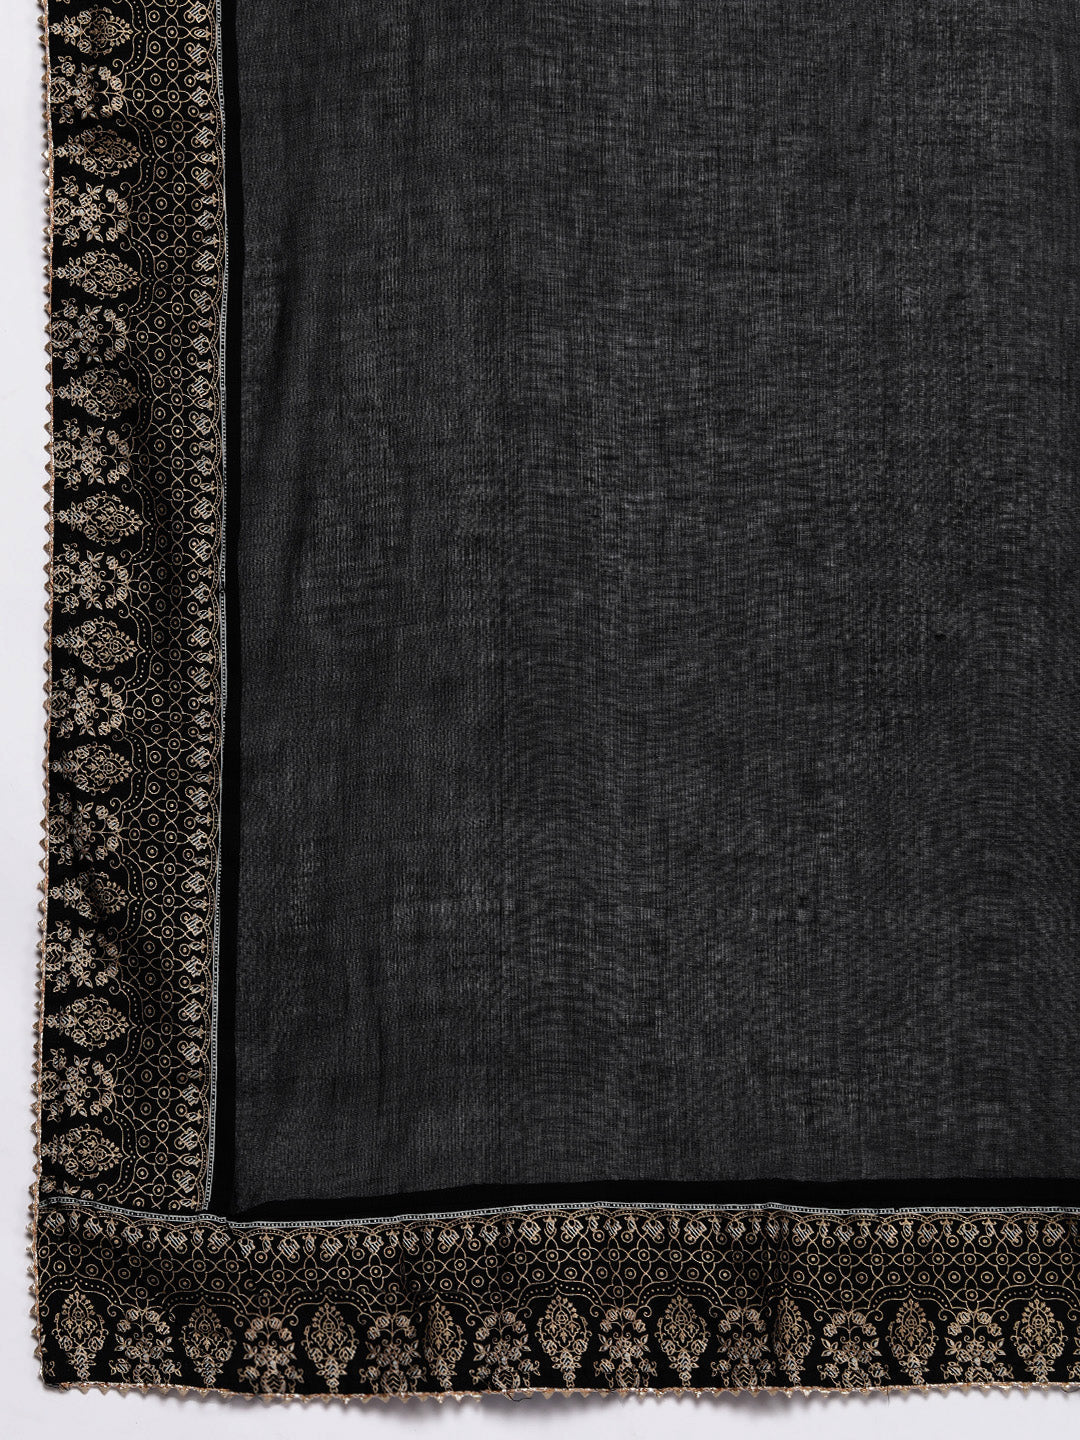 Ishin Women's Cotton Black Embroidered A-Line Kurta Sharara Dupatta Set